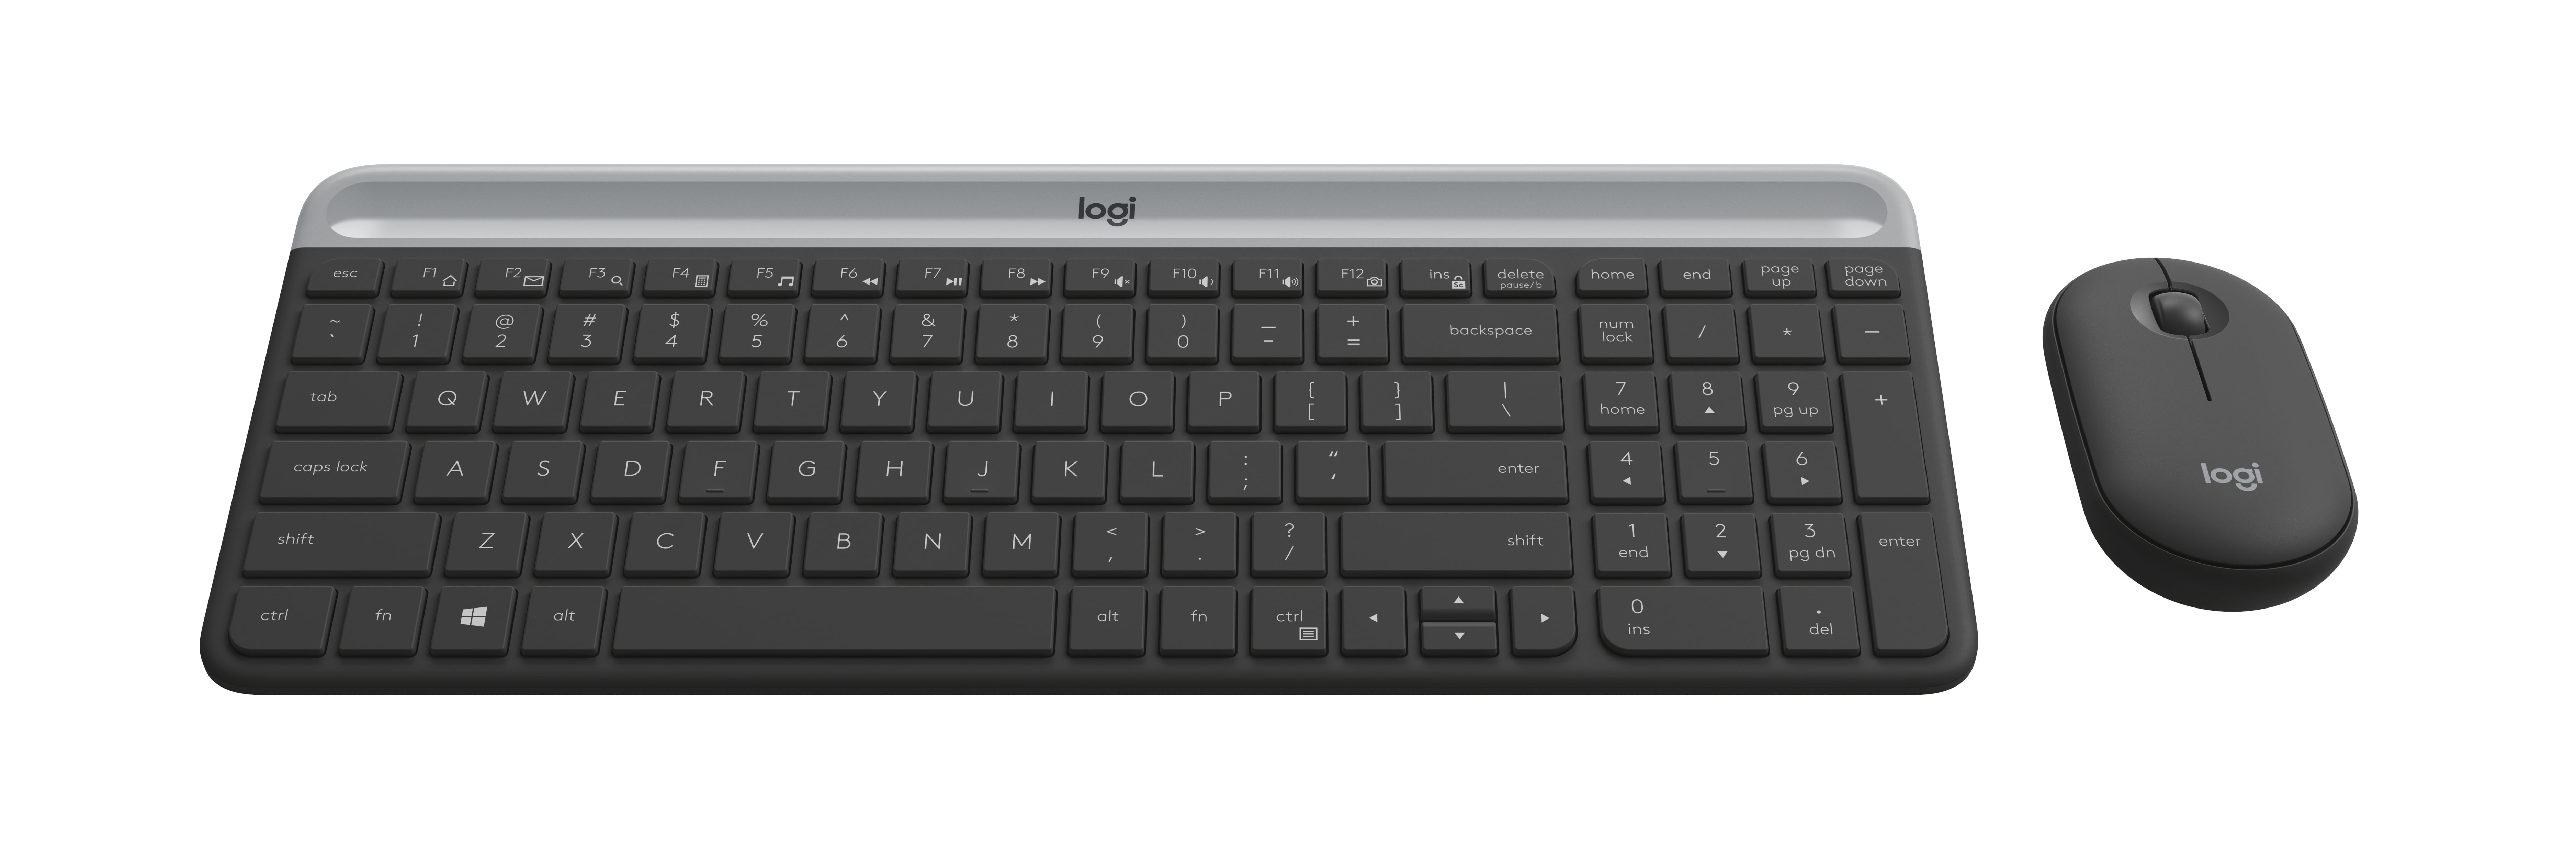 Logitech Slim Wireless Keyboard and Mouse Combo - Low Profile Compact Layout, 